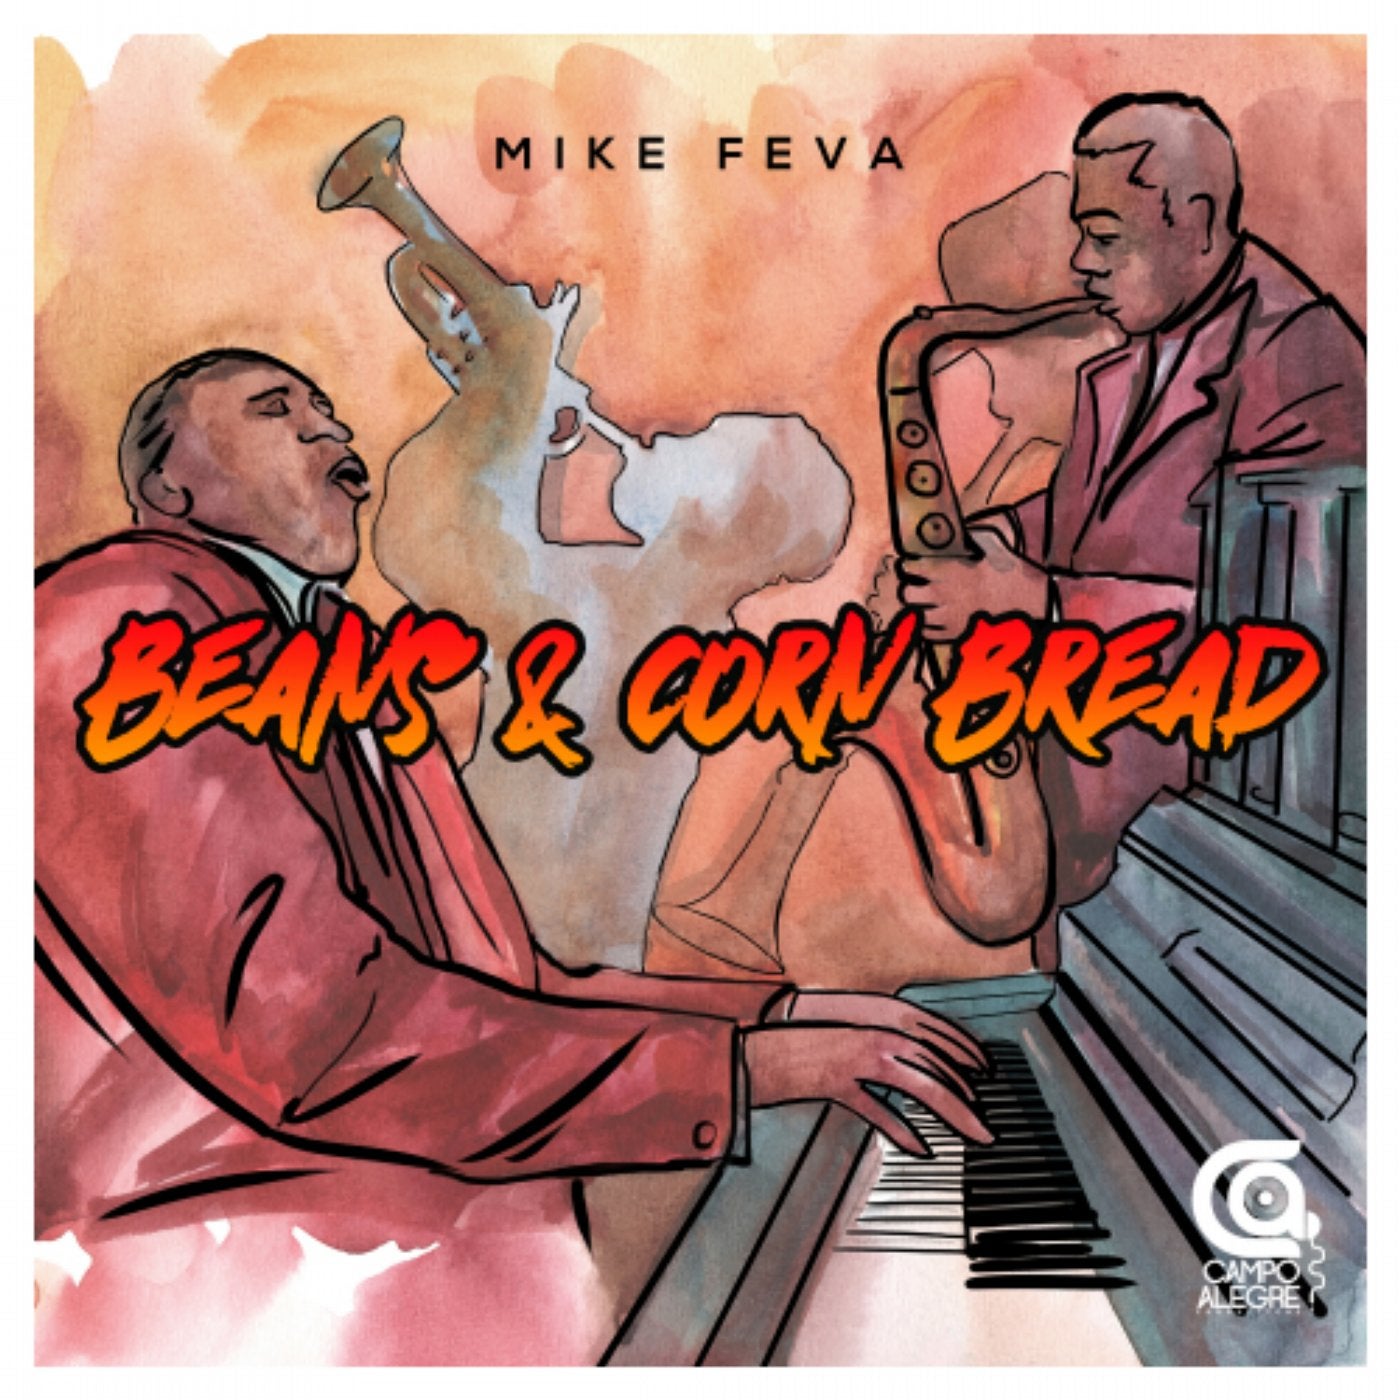 Beans & Corn bread